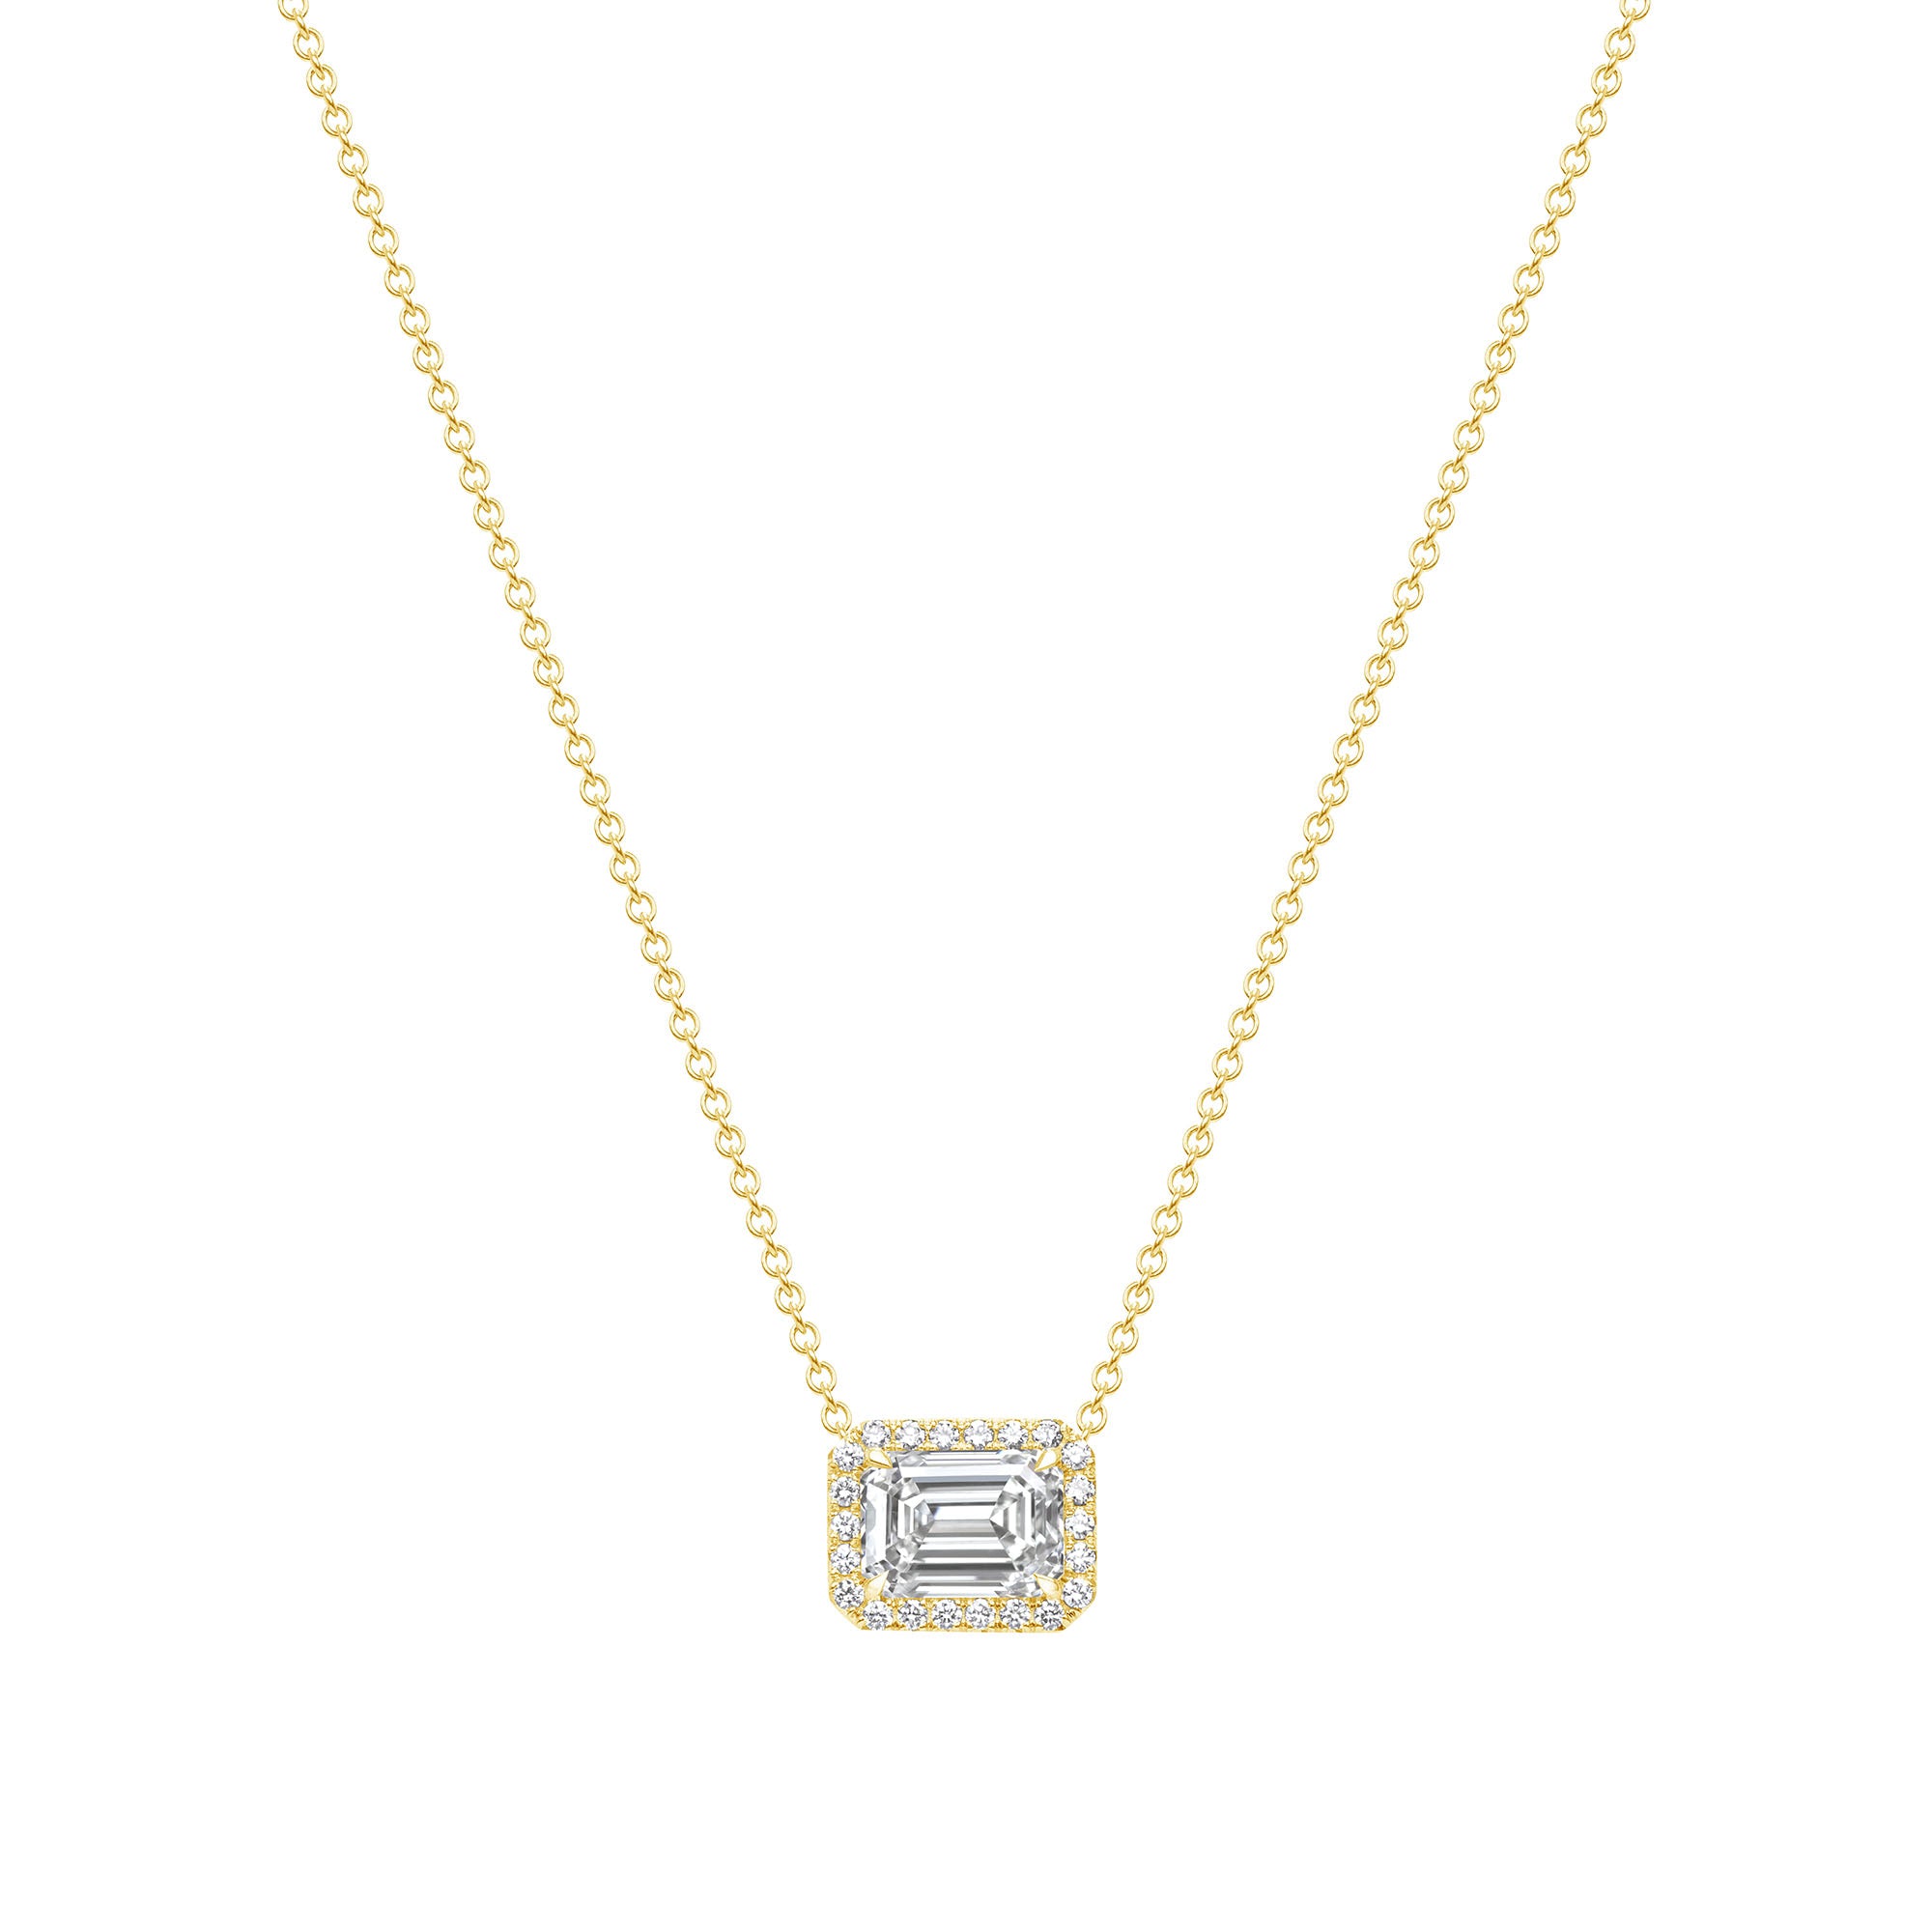 3.23 CT. Halo Emerald Cut Diamond Pendant Necklace in 14K Yellow Gold